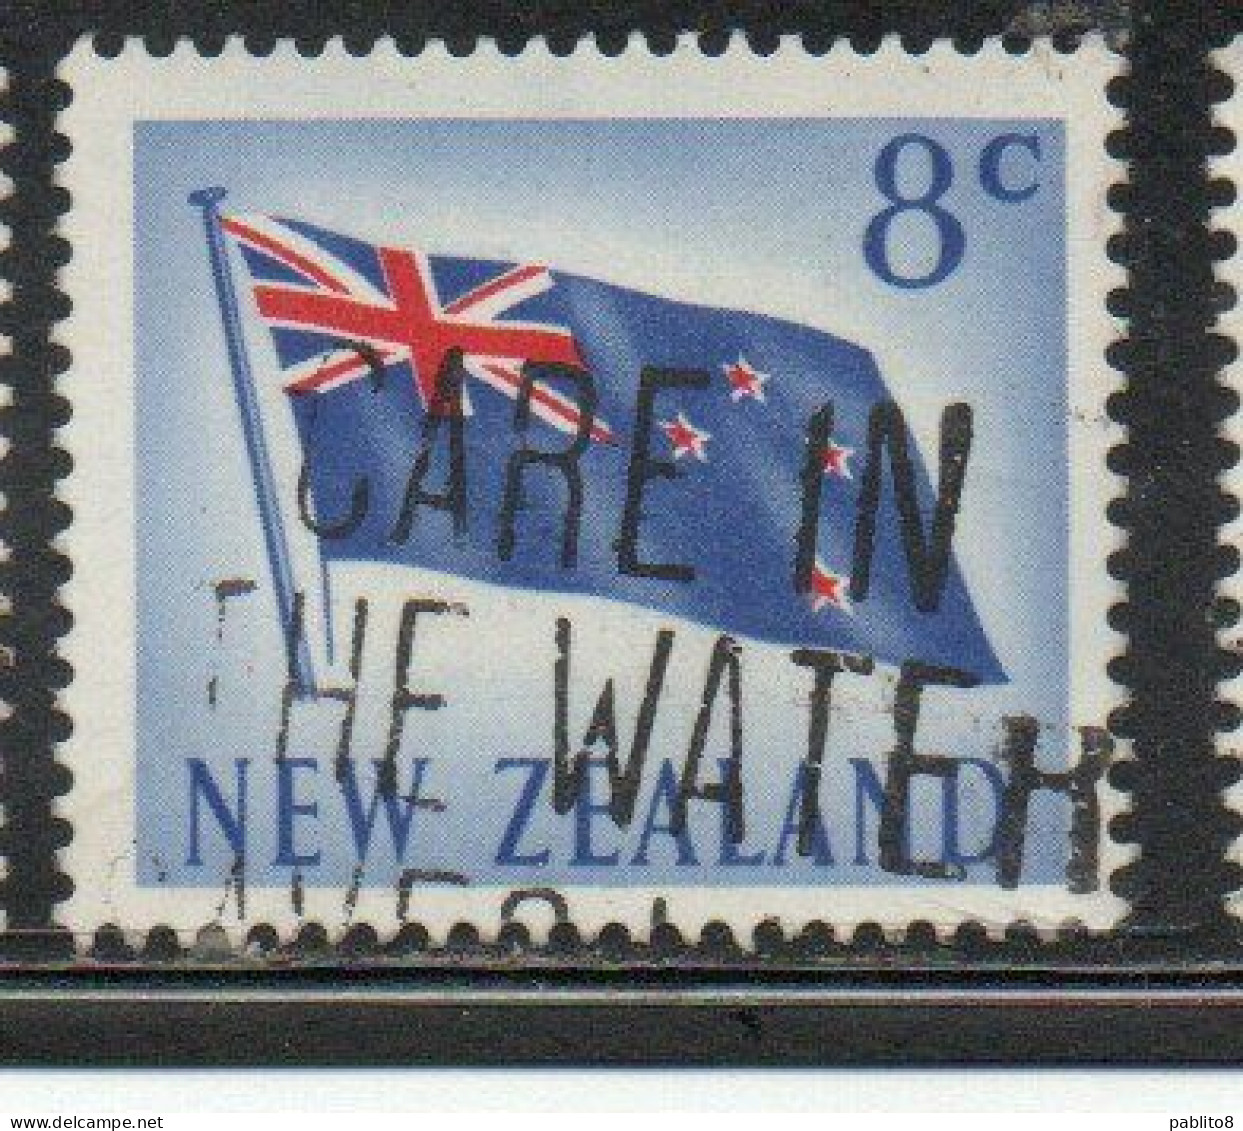 NEW ZEALAND NUOVA ZELANDA 1967 1970 FLAG 8c USED USATO OBLITERE' - Gebruikt